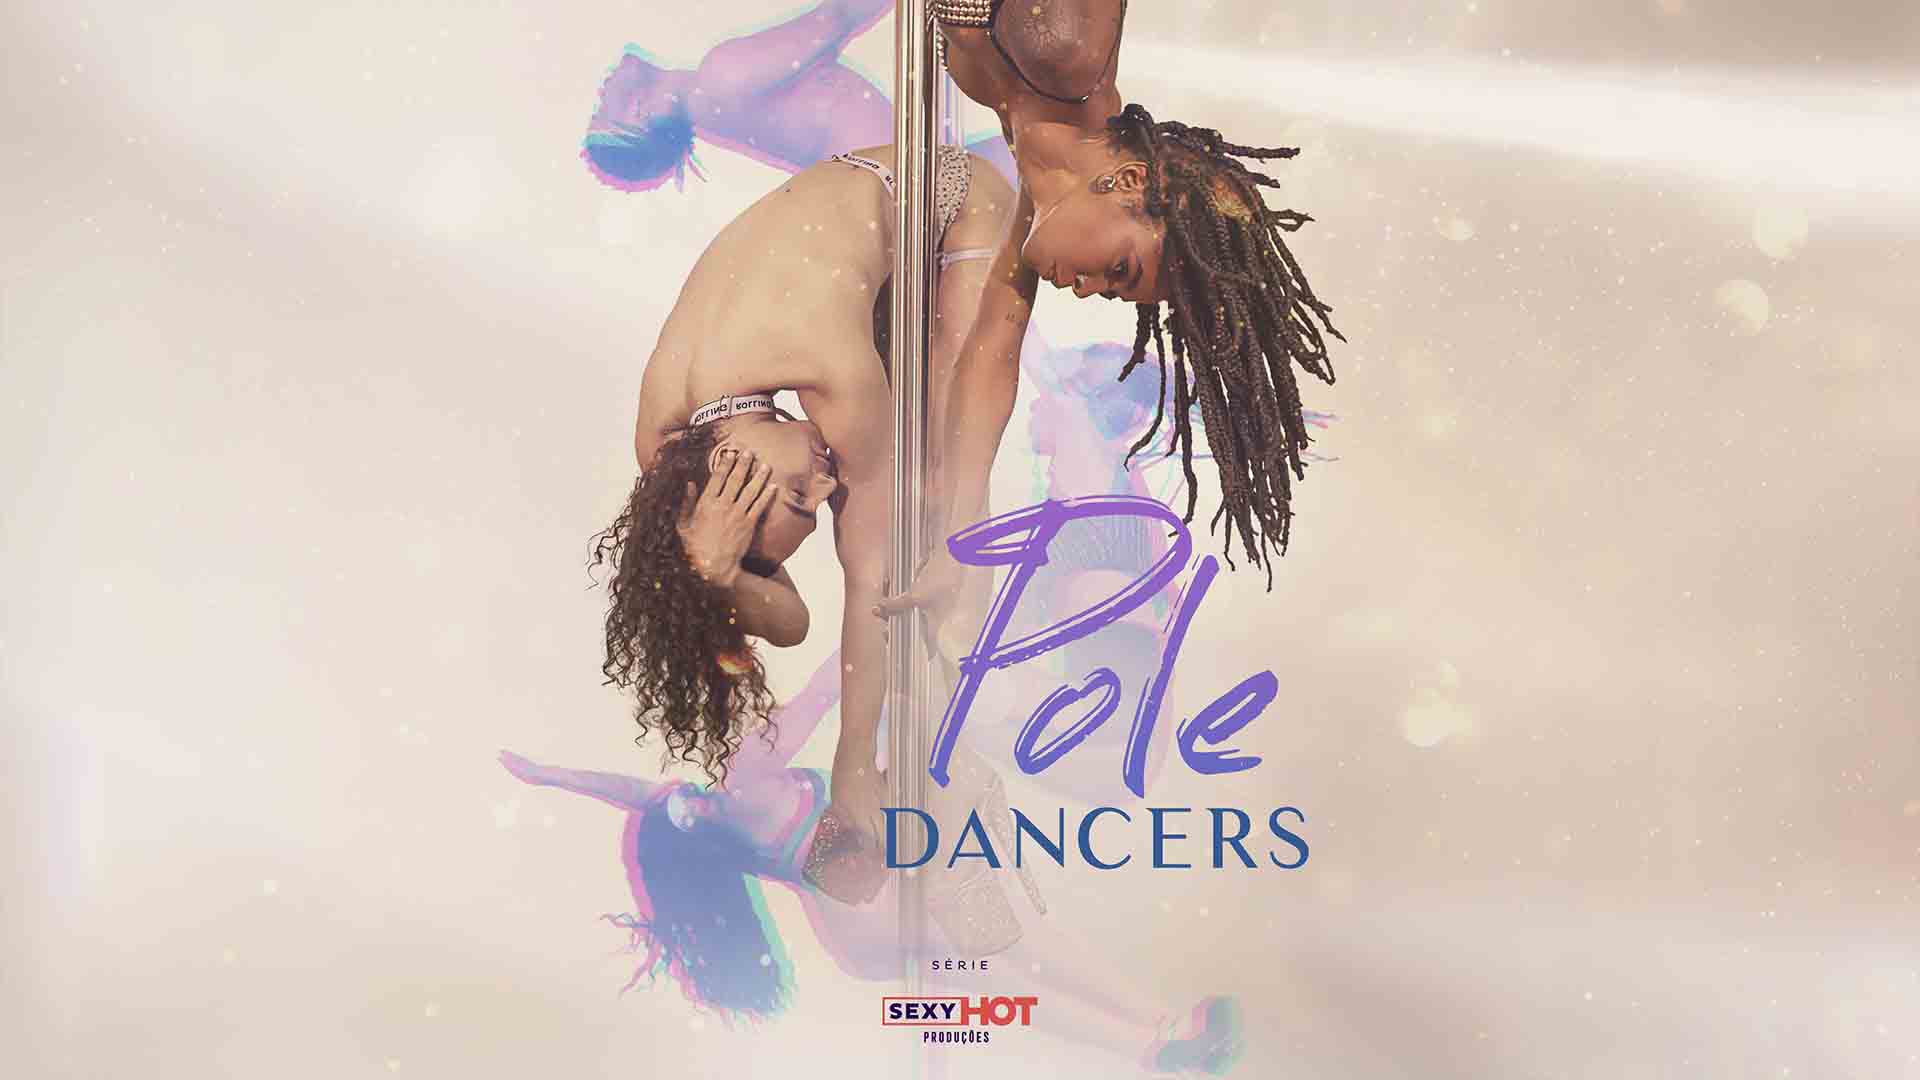 Pole Dancers